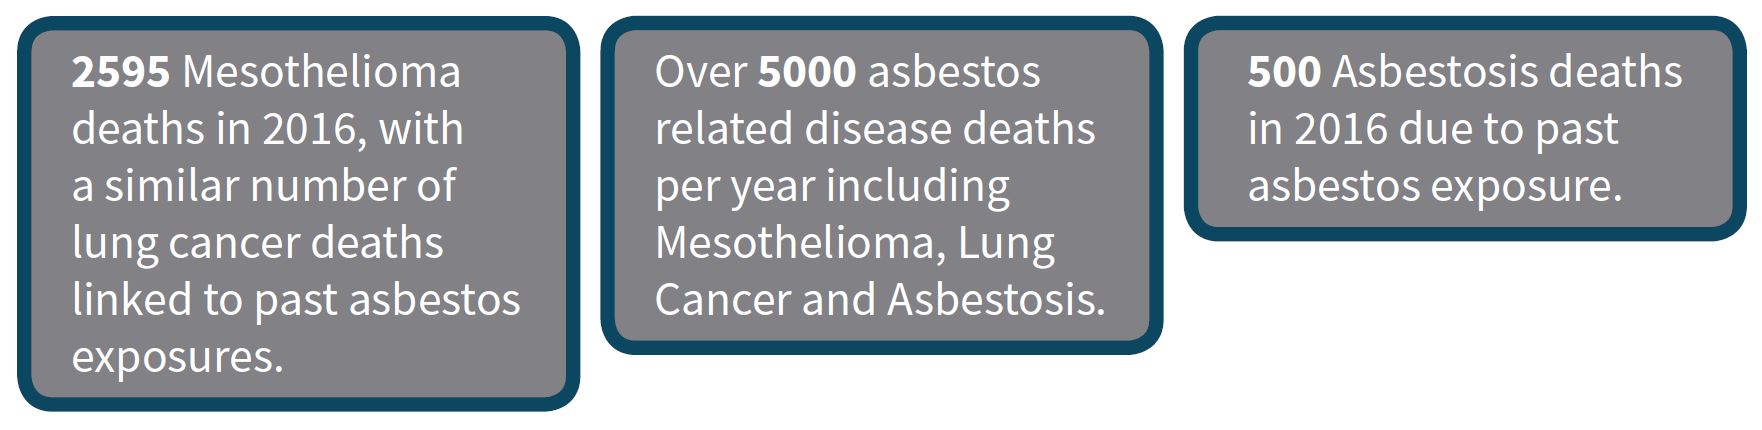 asbestos facts